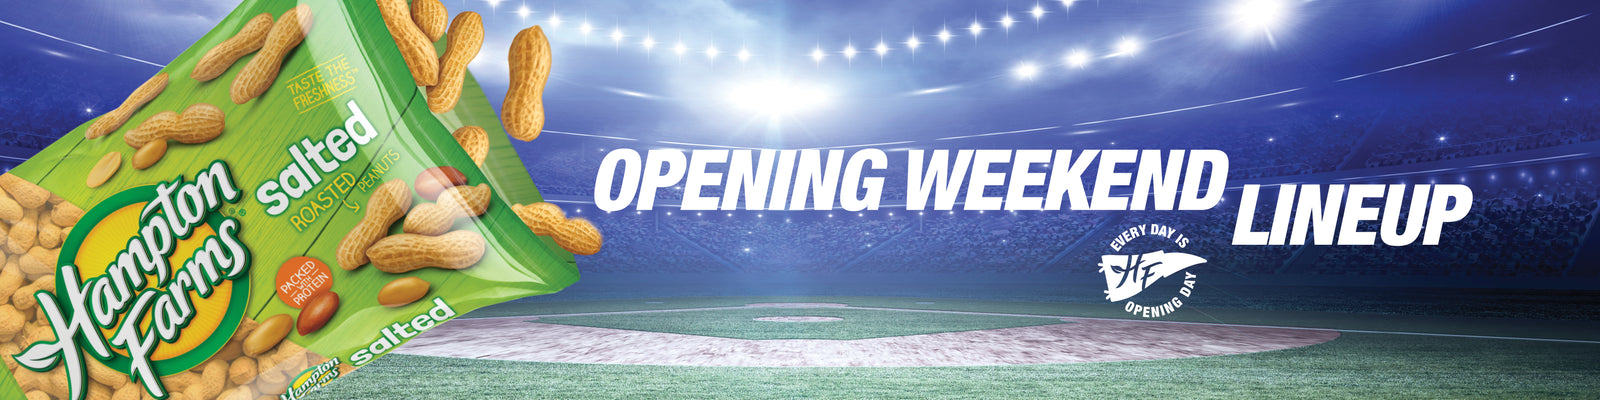 MLB Opening Weekend Lineup: 7/23 - 7/26